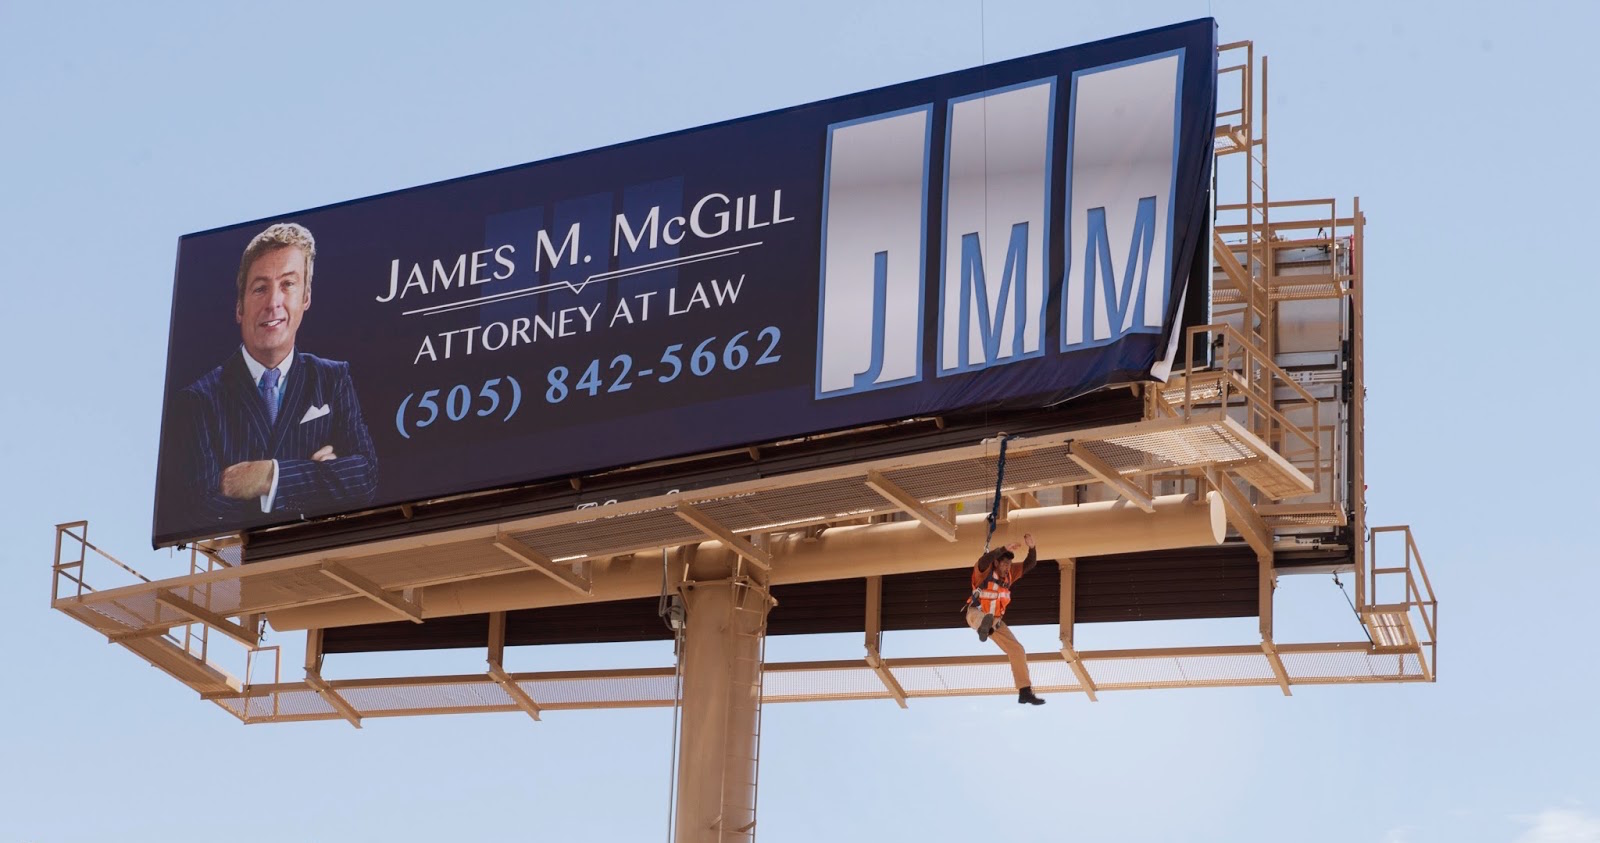 Better Call Saul: James M. McGill billboard - Fonts In Use